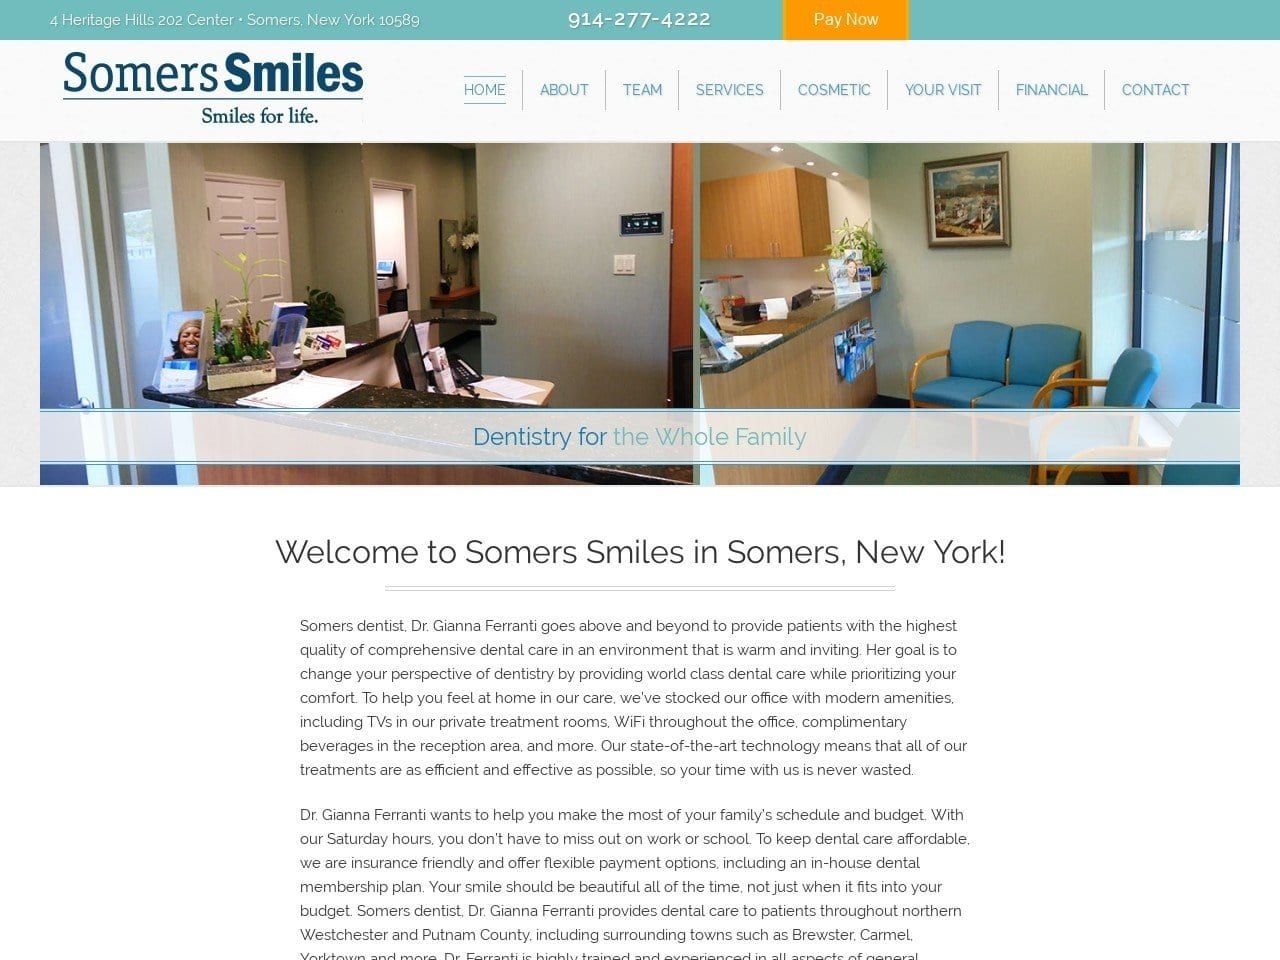 Somers Smiles Website Screenshot from somerssmiles.com